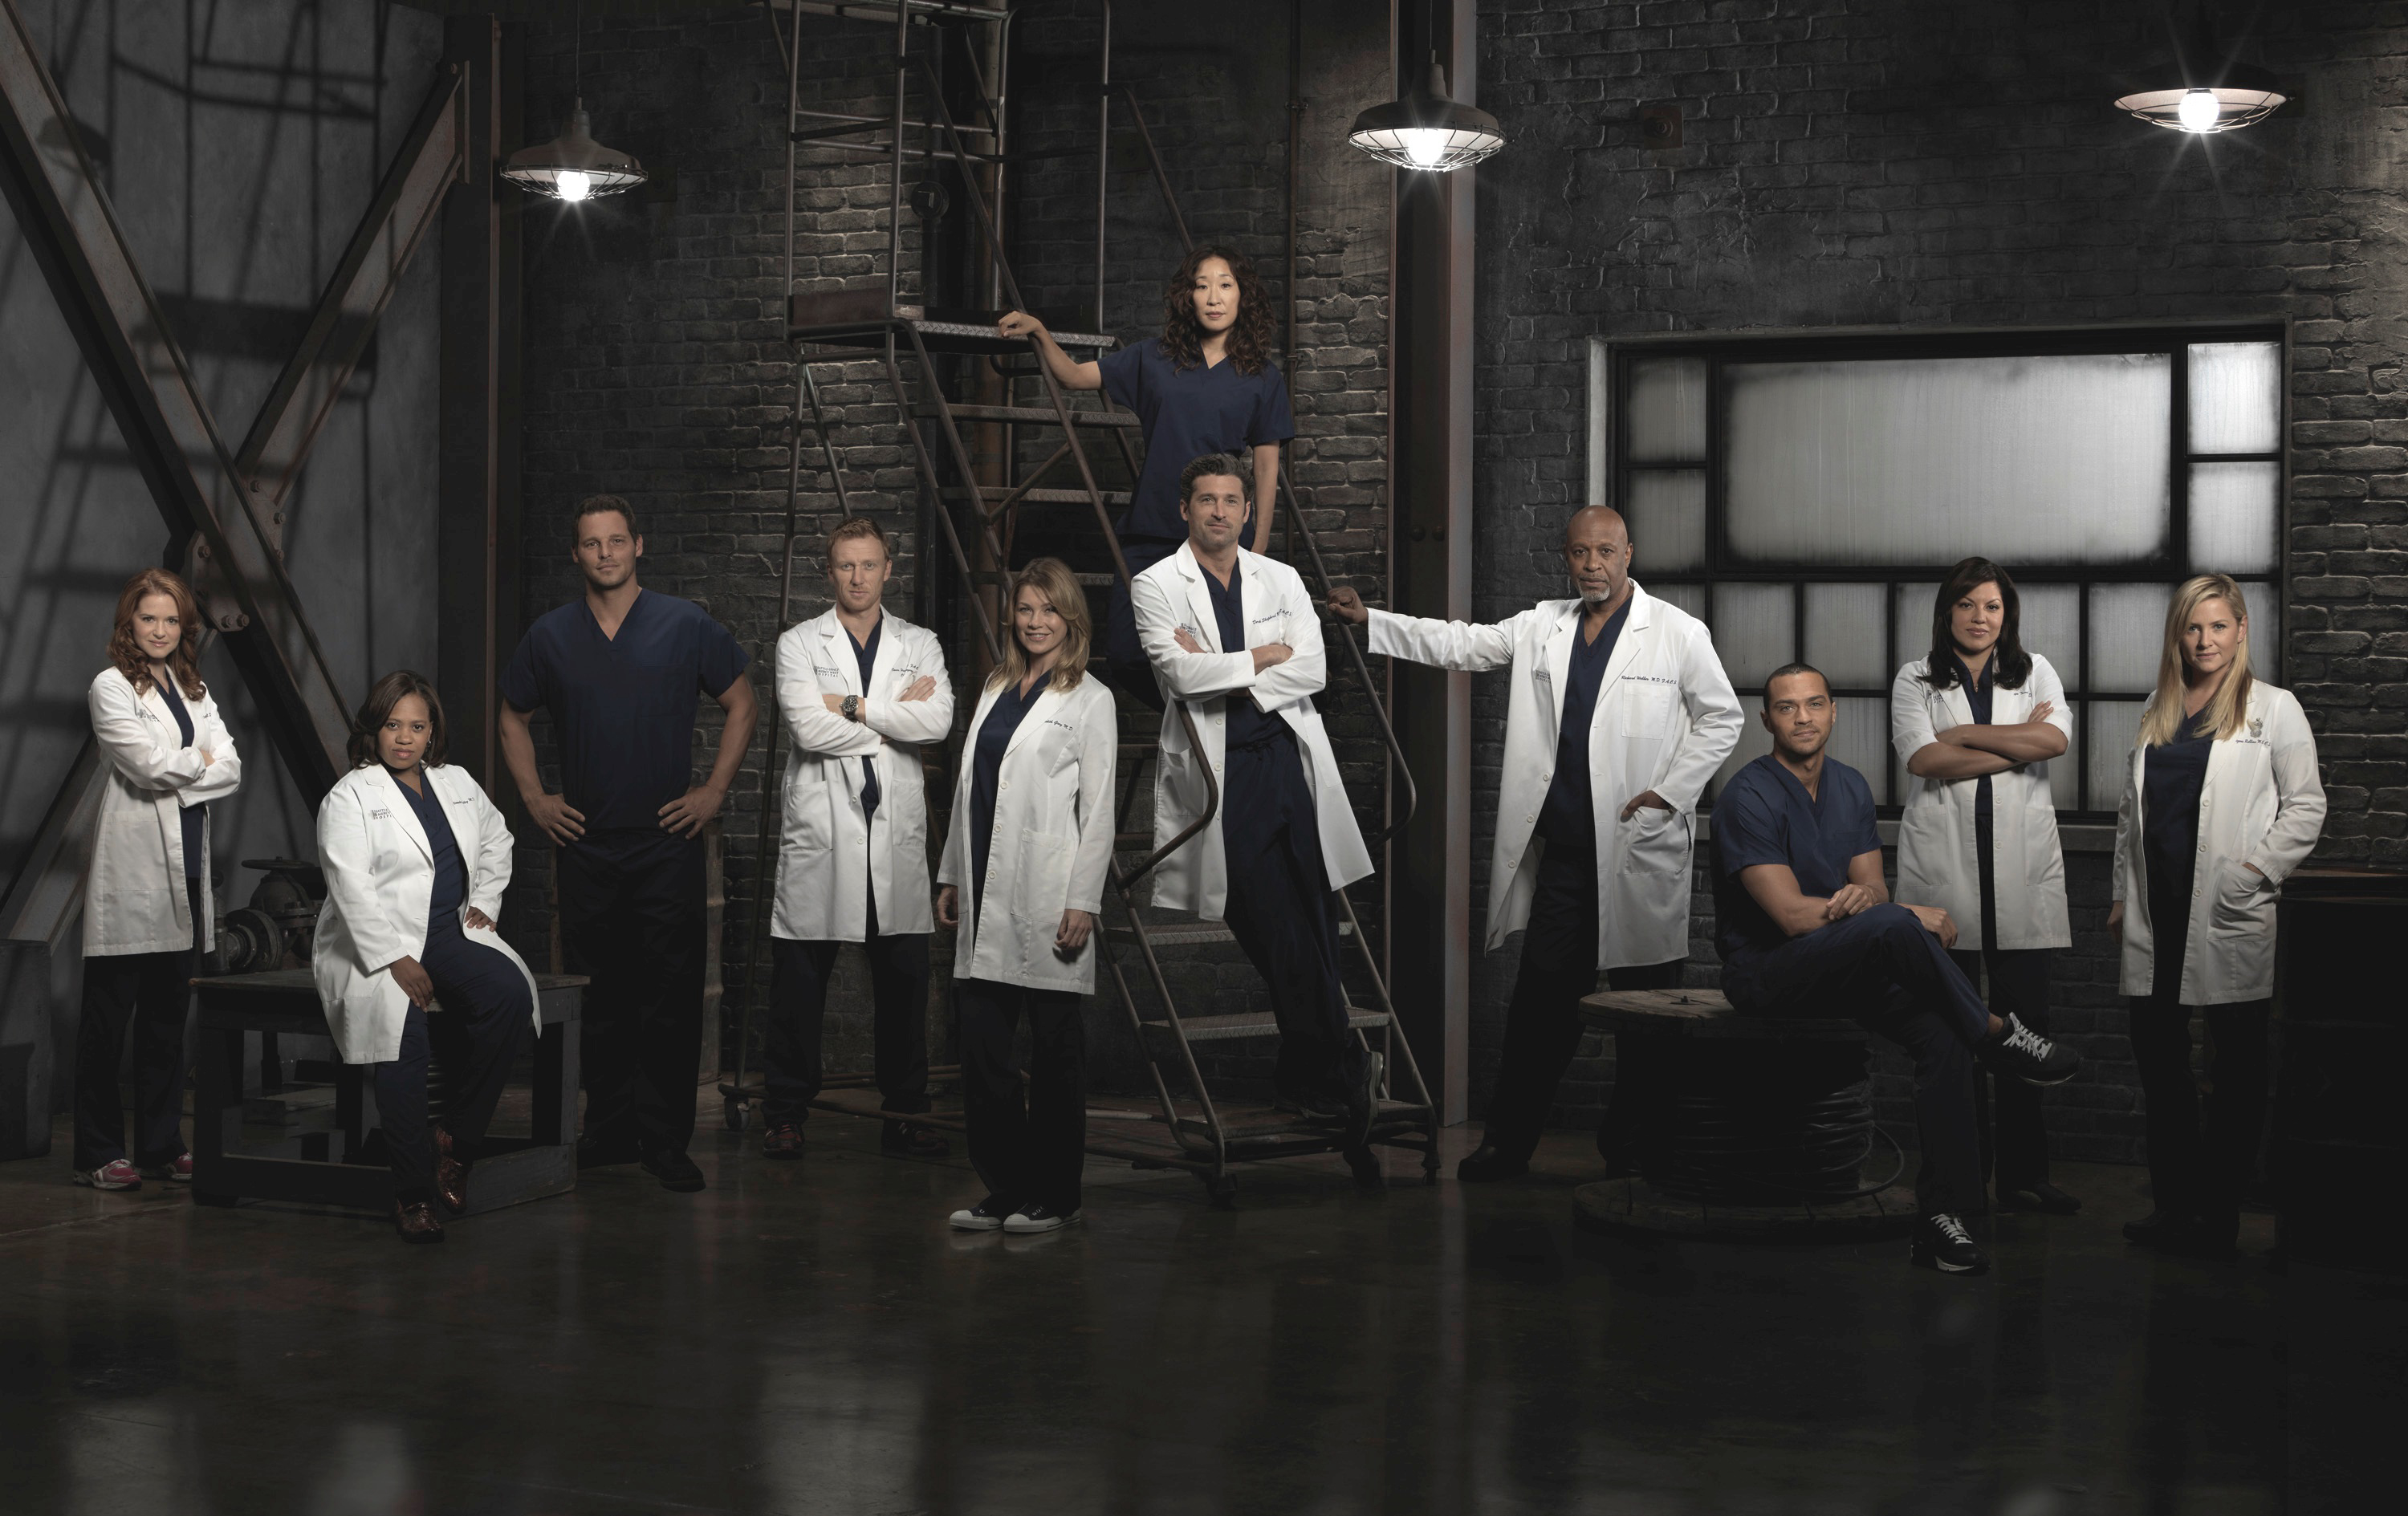 Ca Phẫu Thuật Của Grey (Phần 9) - Grey's Anatomy (Season 9) (2012)